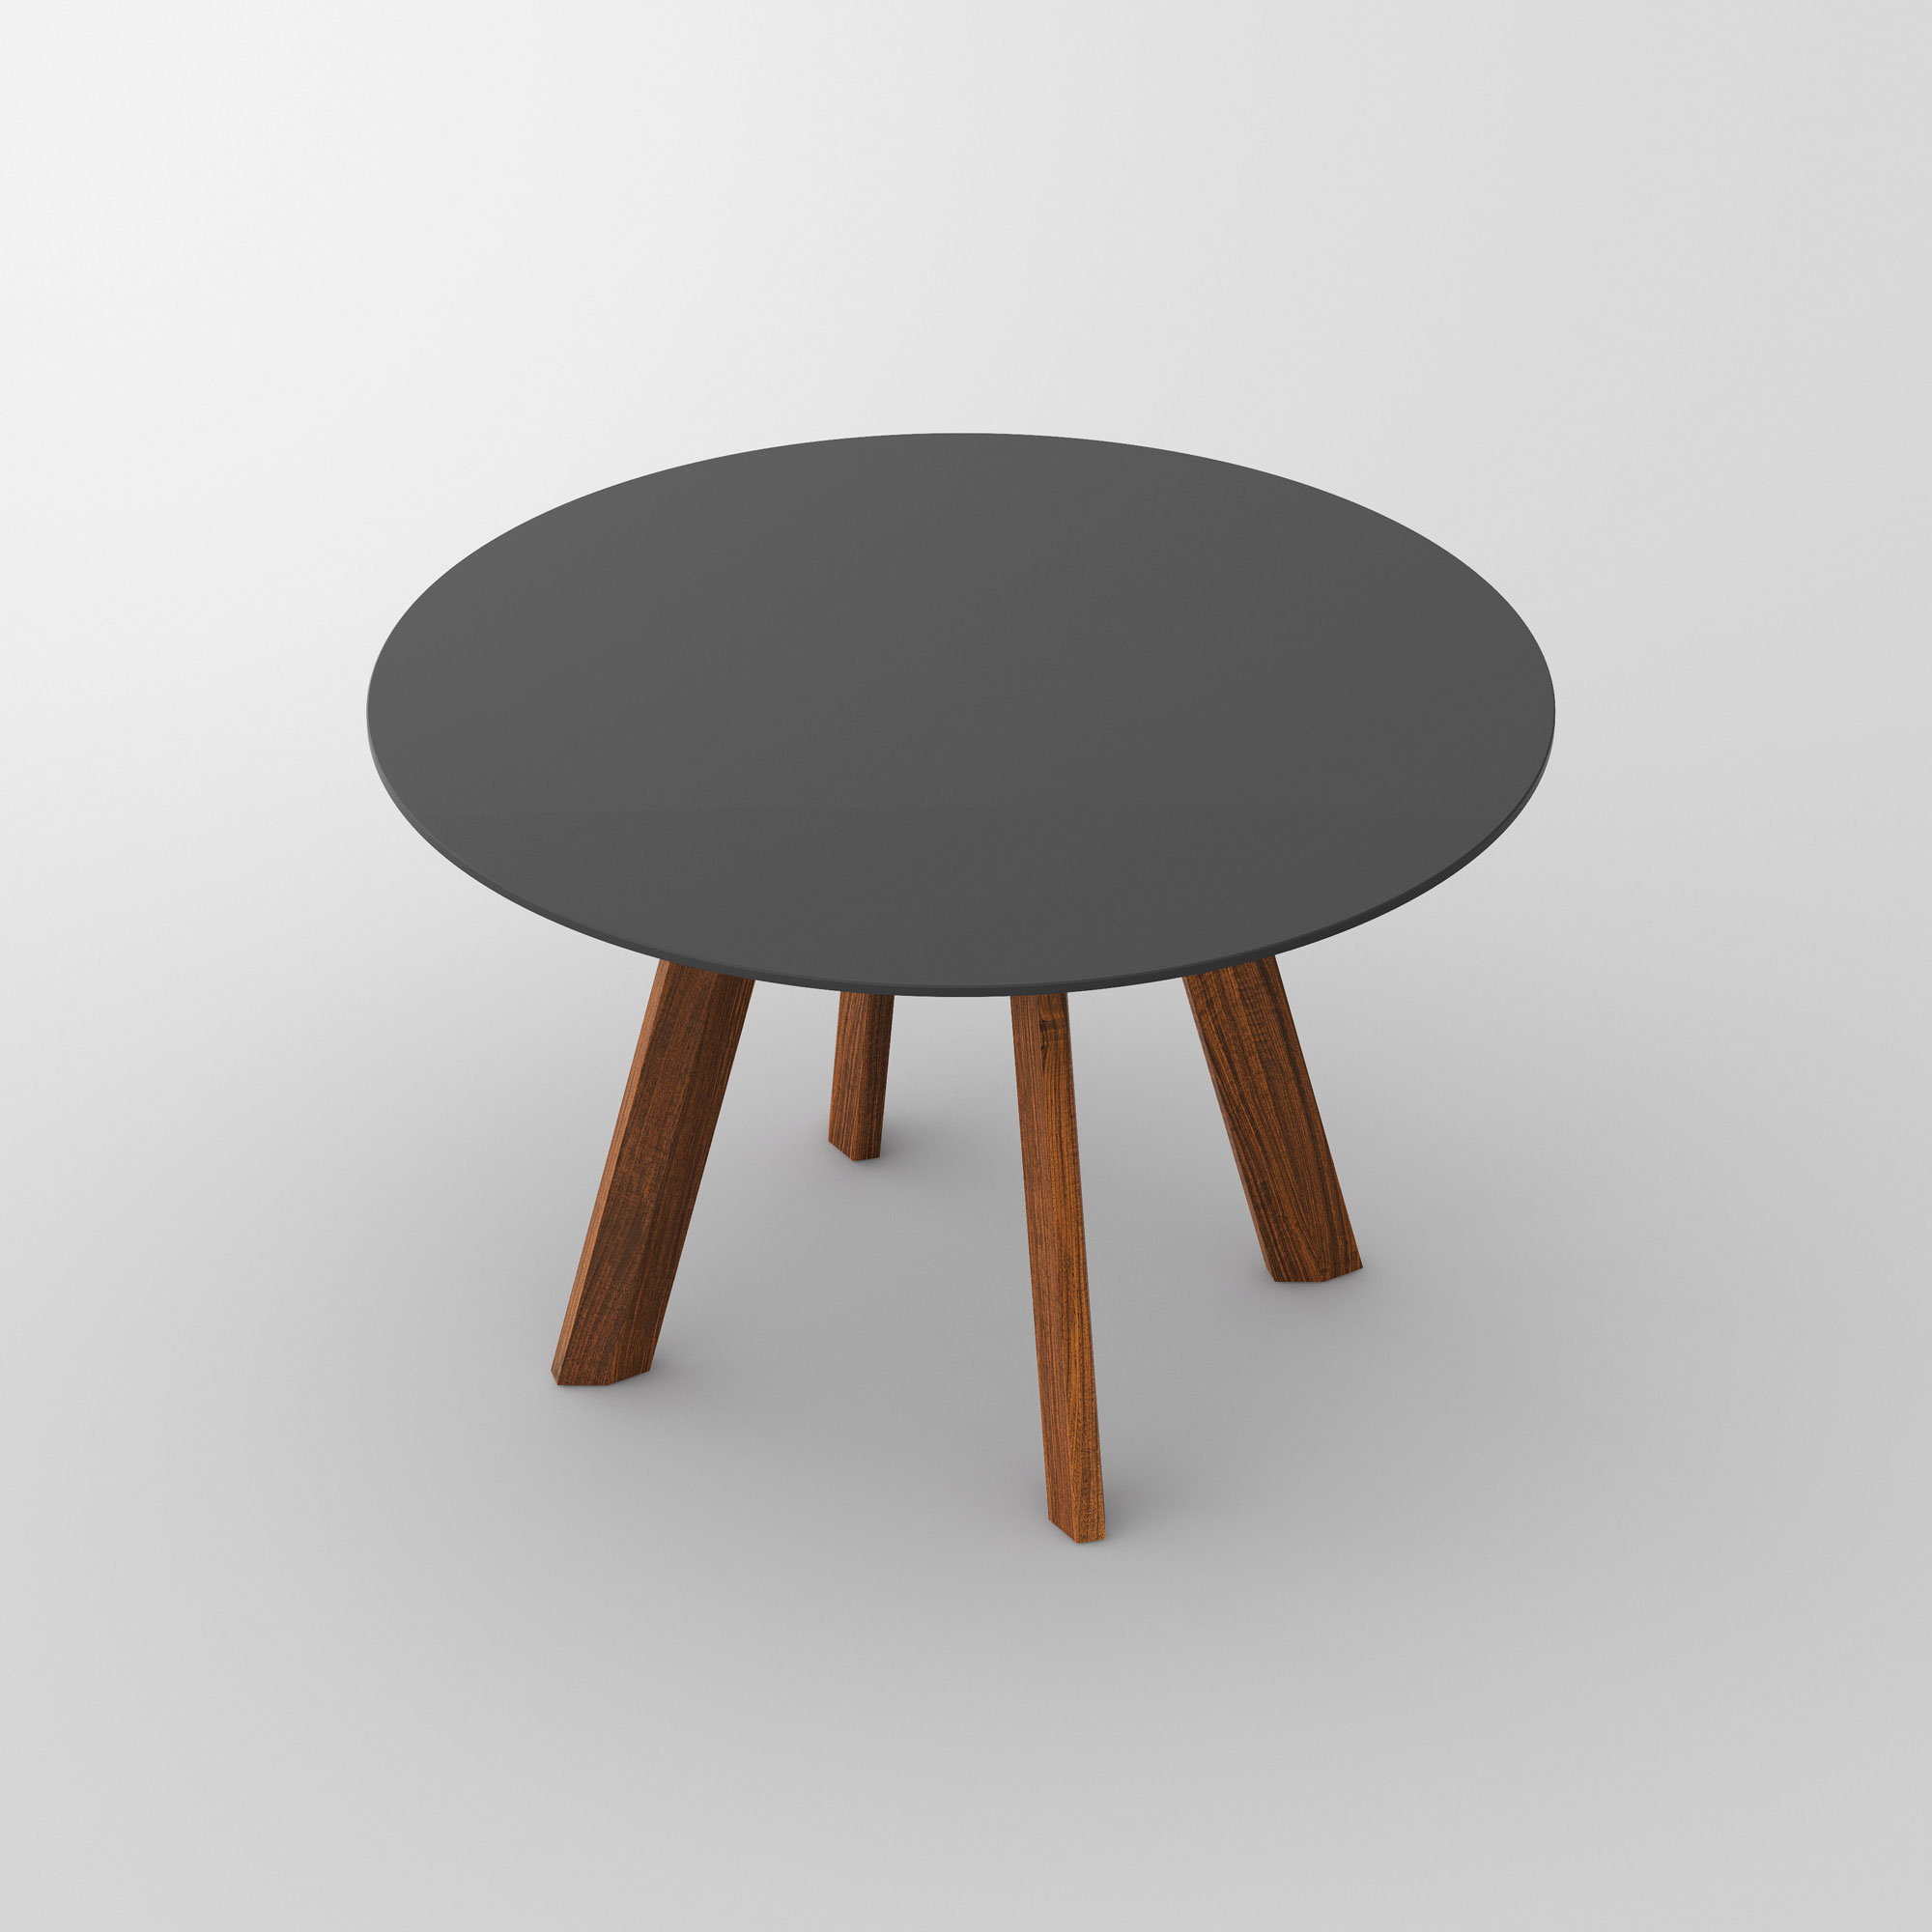 Round Linoleum Table RHOMBI ROUND LINO cam3 custom made in solid wood by vitamin design